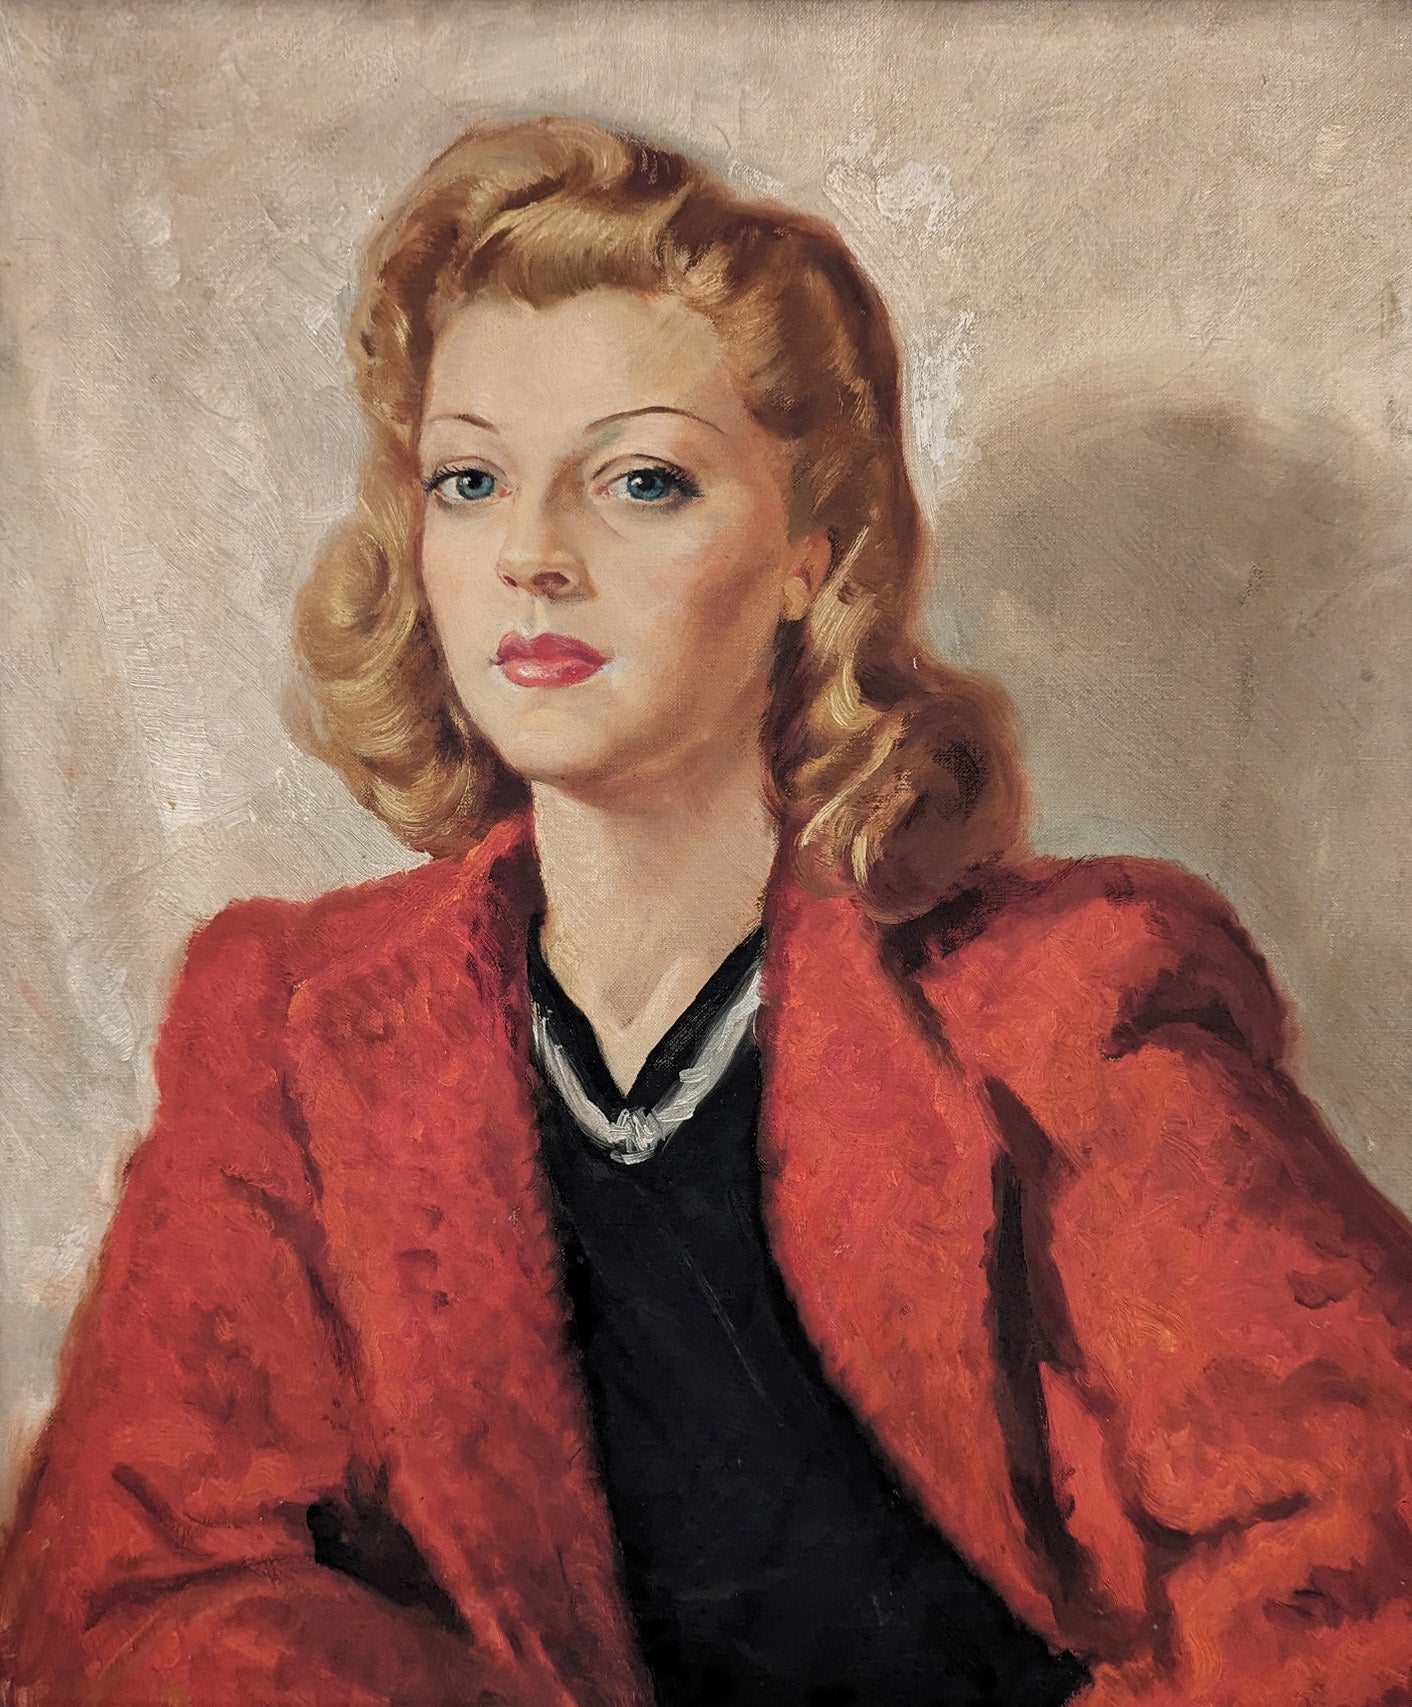 Blonde Bombshell, circa 1940